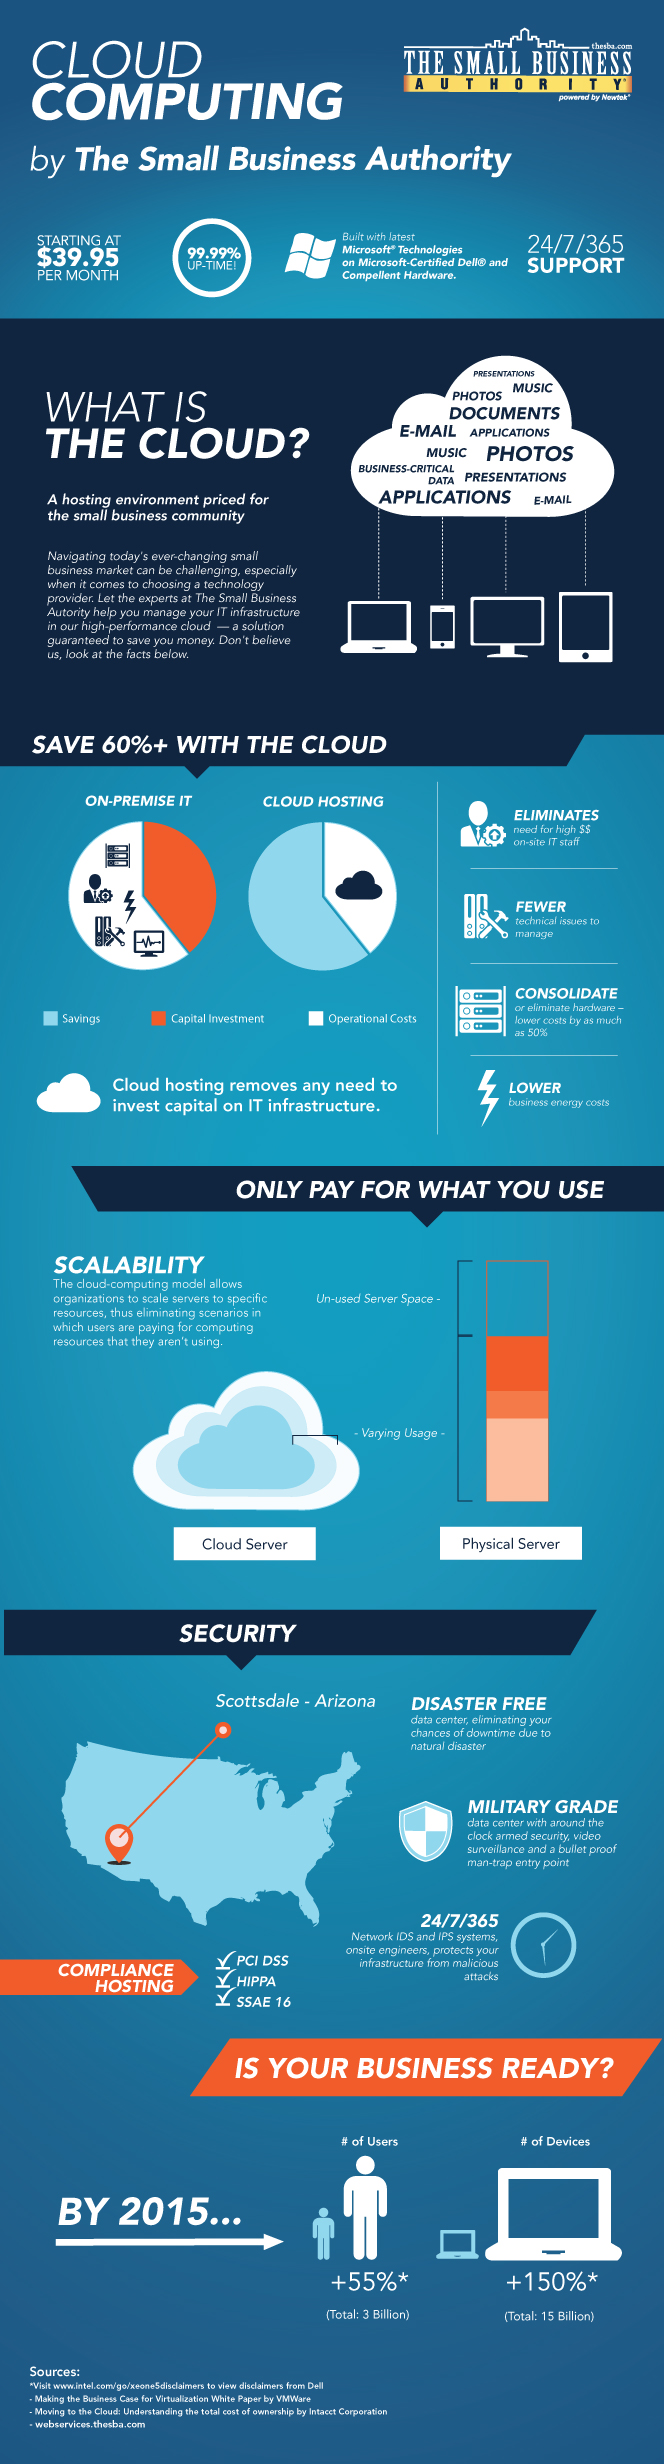 Cloud Computing Mini Guide | The Cloud Infographic